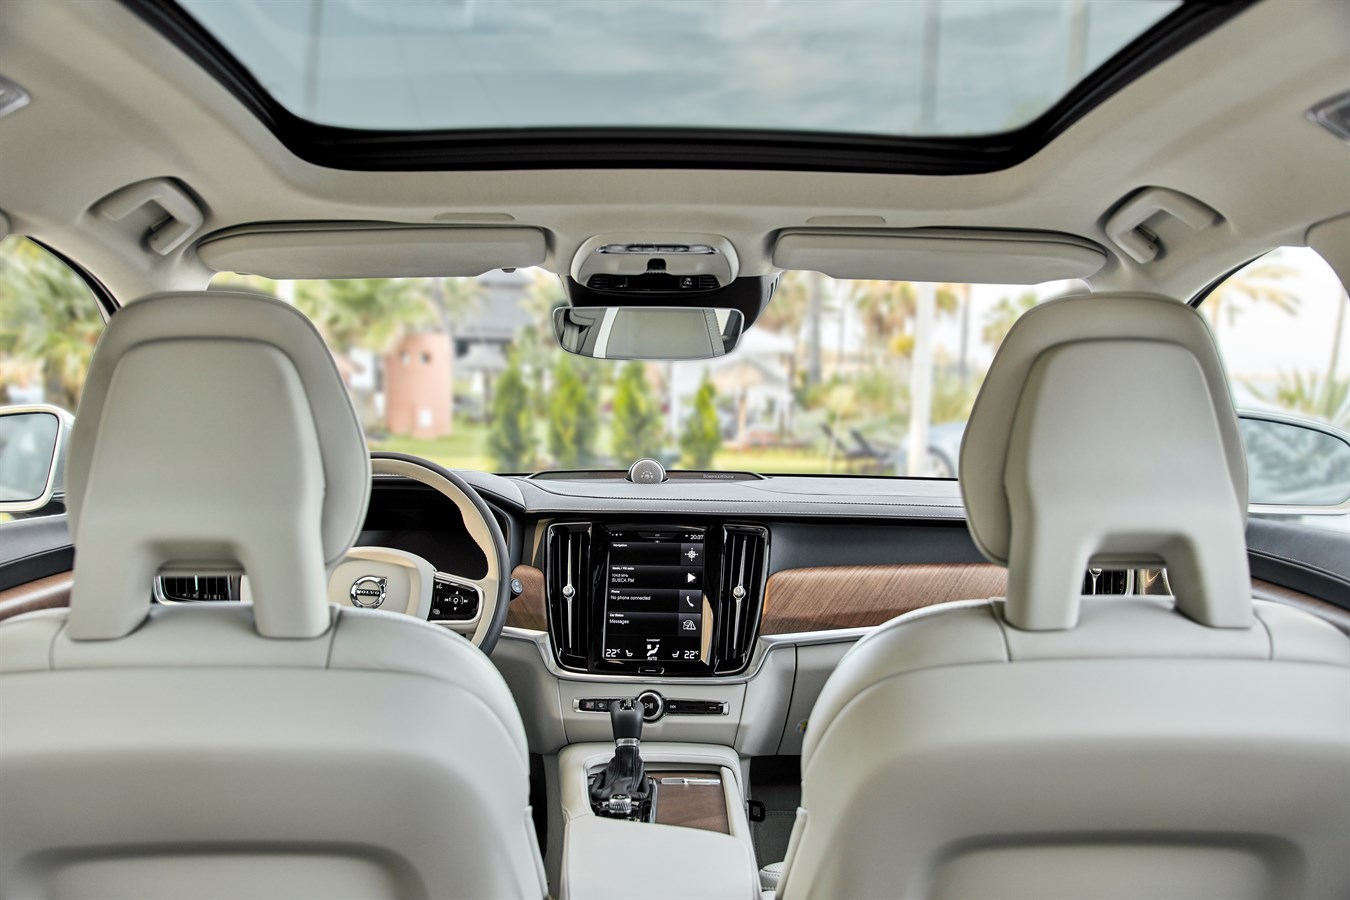 New Volvo V90 interior